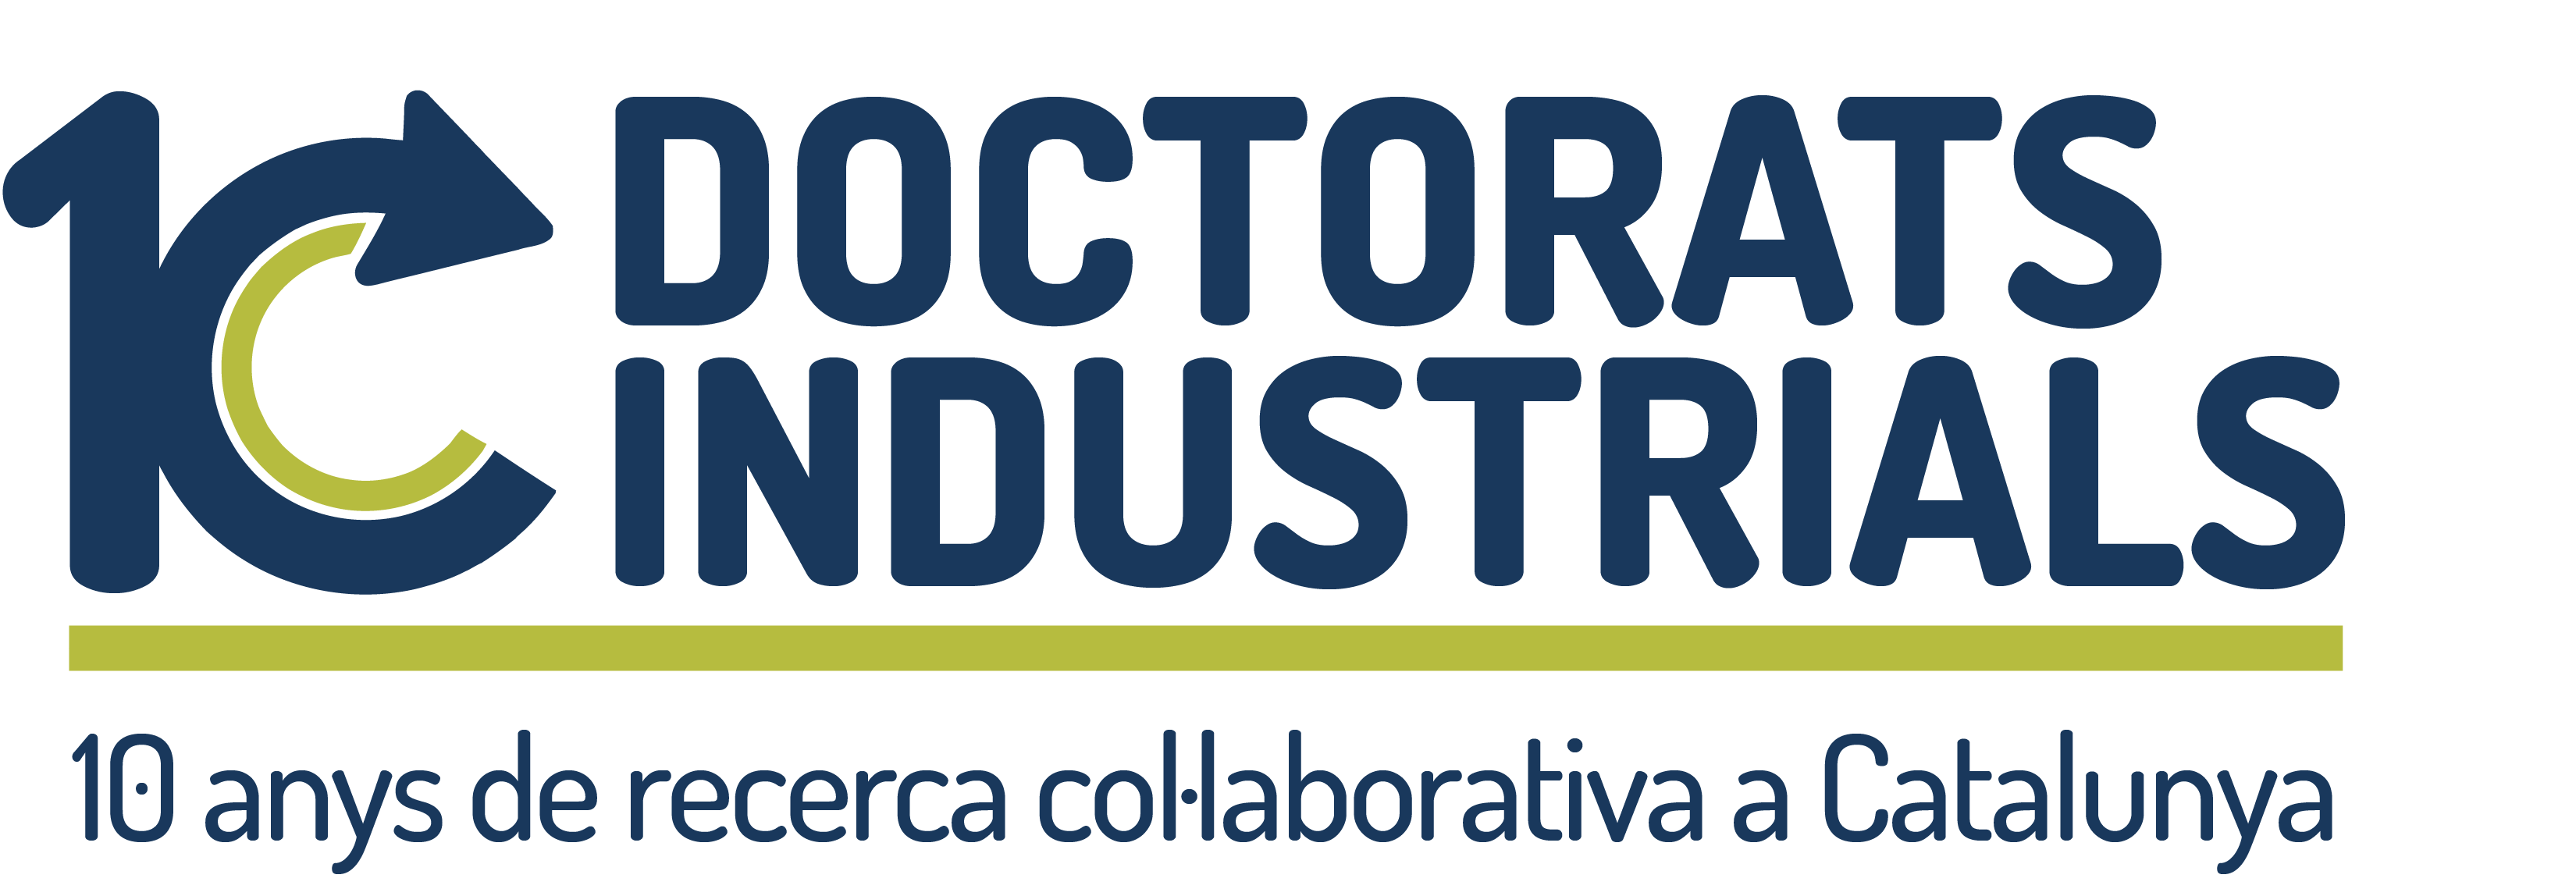 Industrial Doctorates Logotype